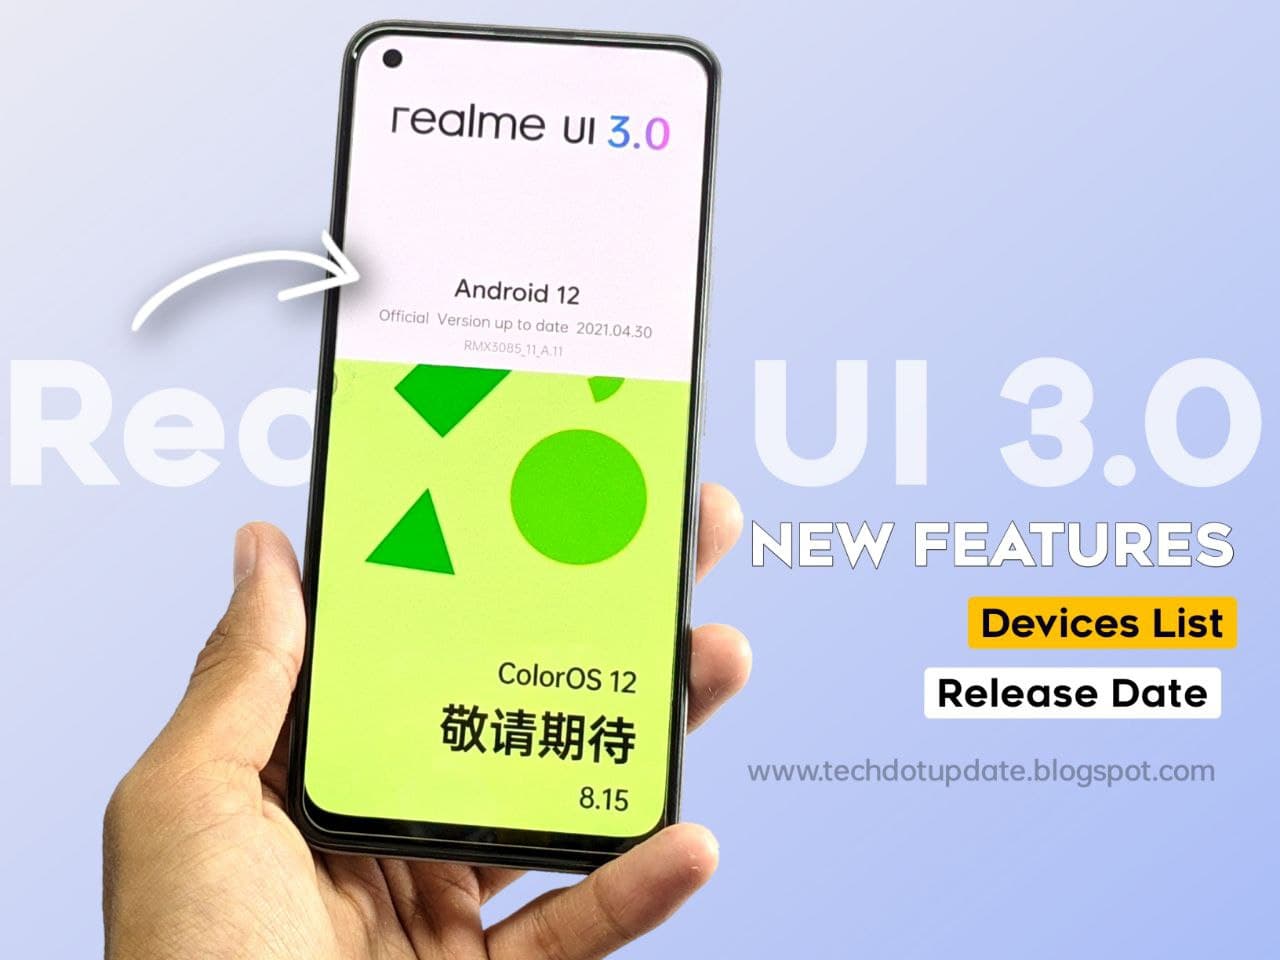 Realme UI 3.0 device list. Release device